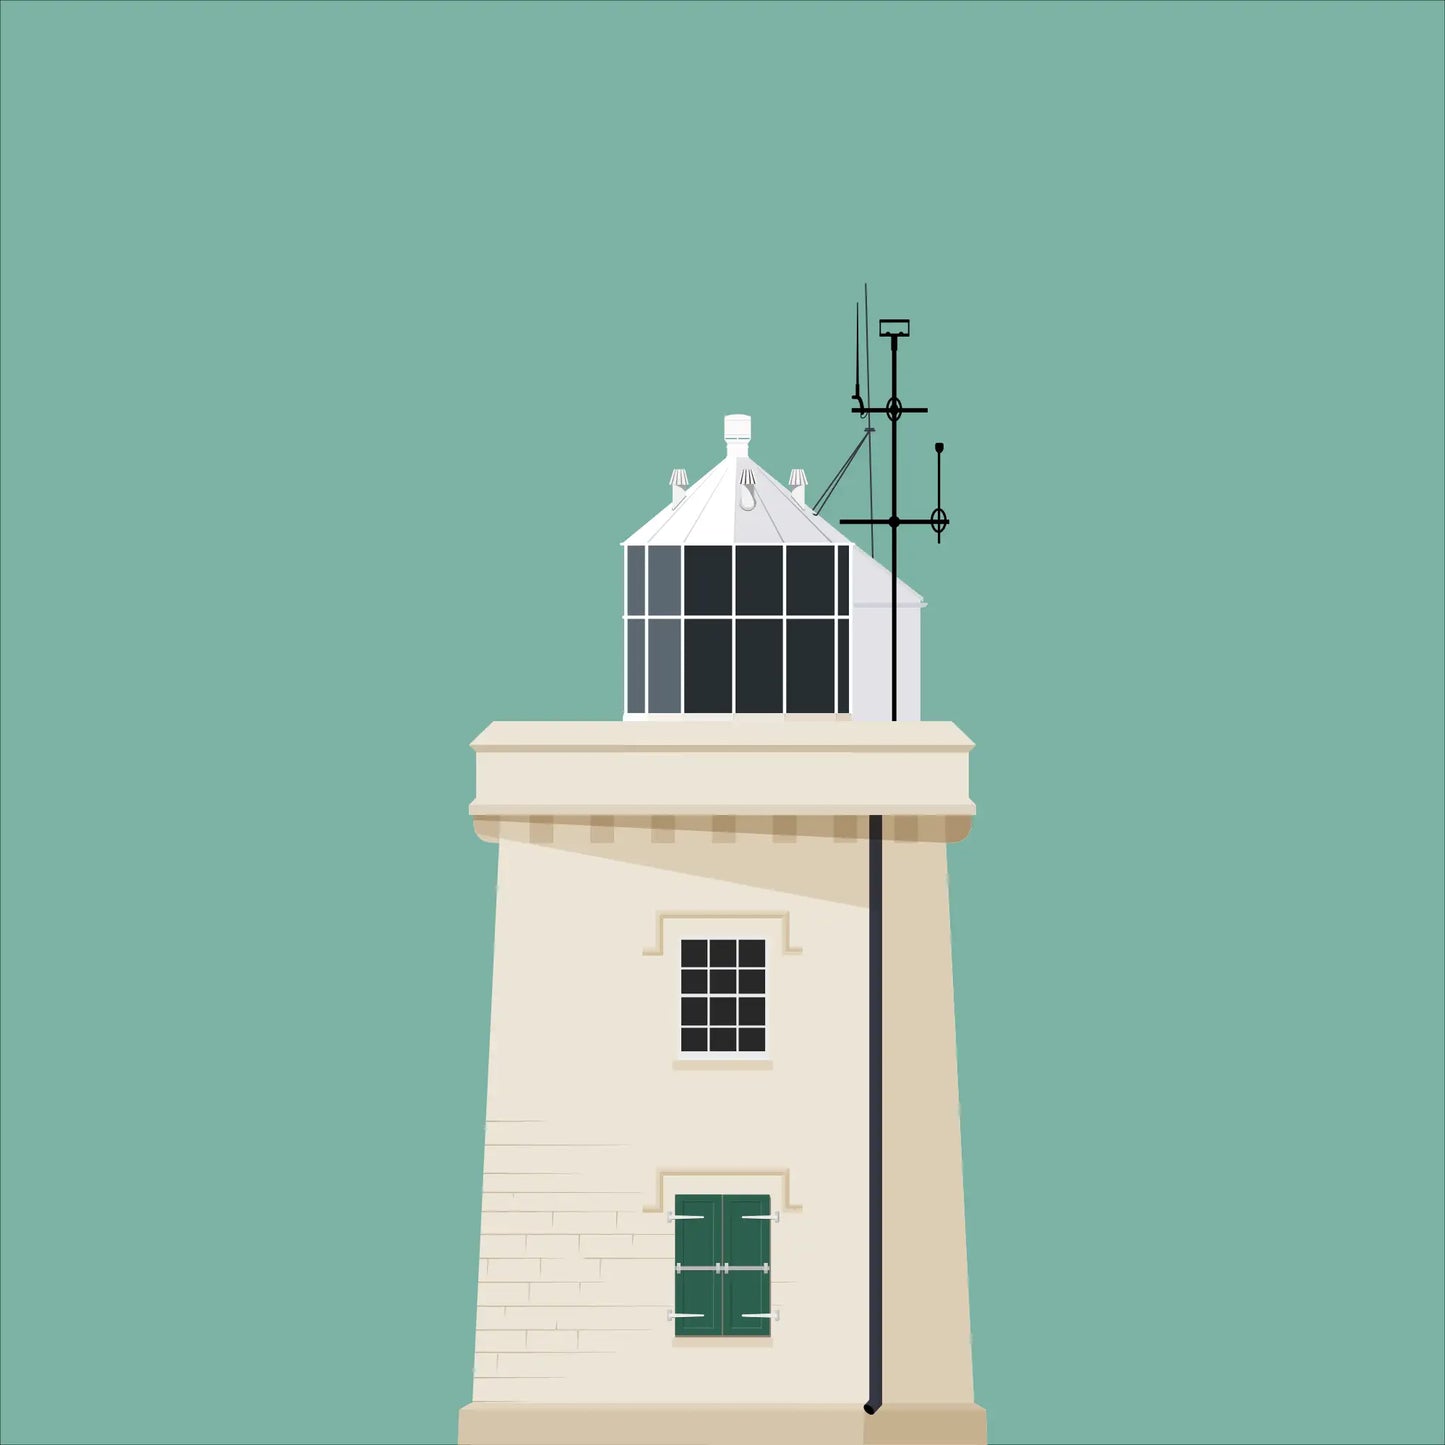 Illustration of Blacksod lighthouse on a white background inside light blue square.